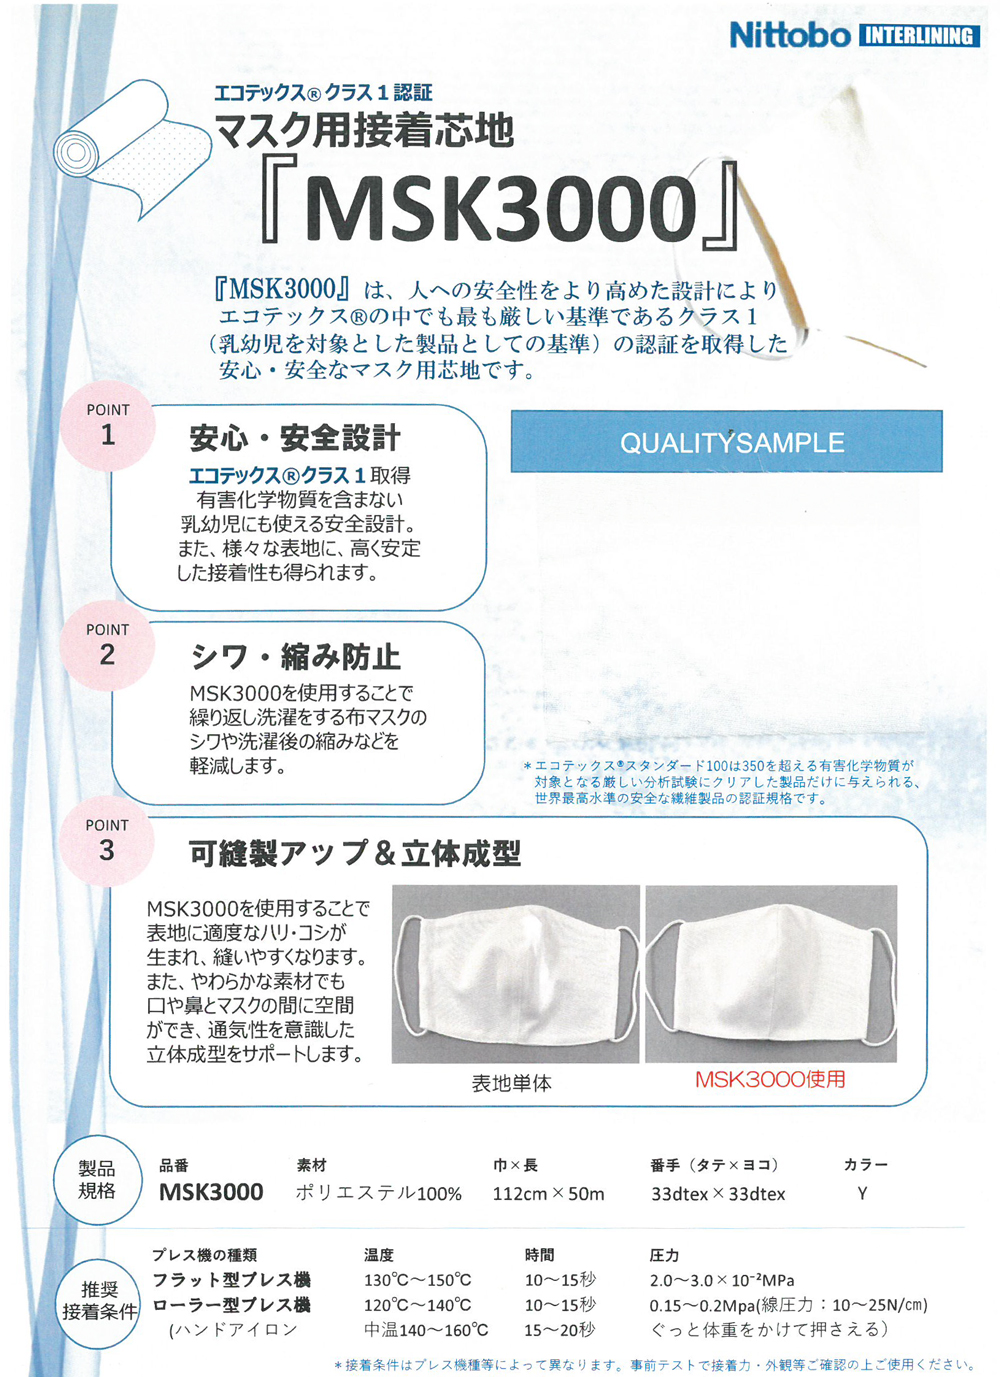 MSK3000 OEKO-TEX® Ecotex® Standard 100认证口罩的粘合衬[衬布] 日东纺绩